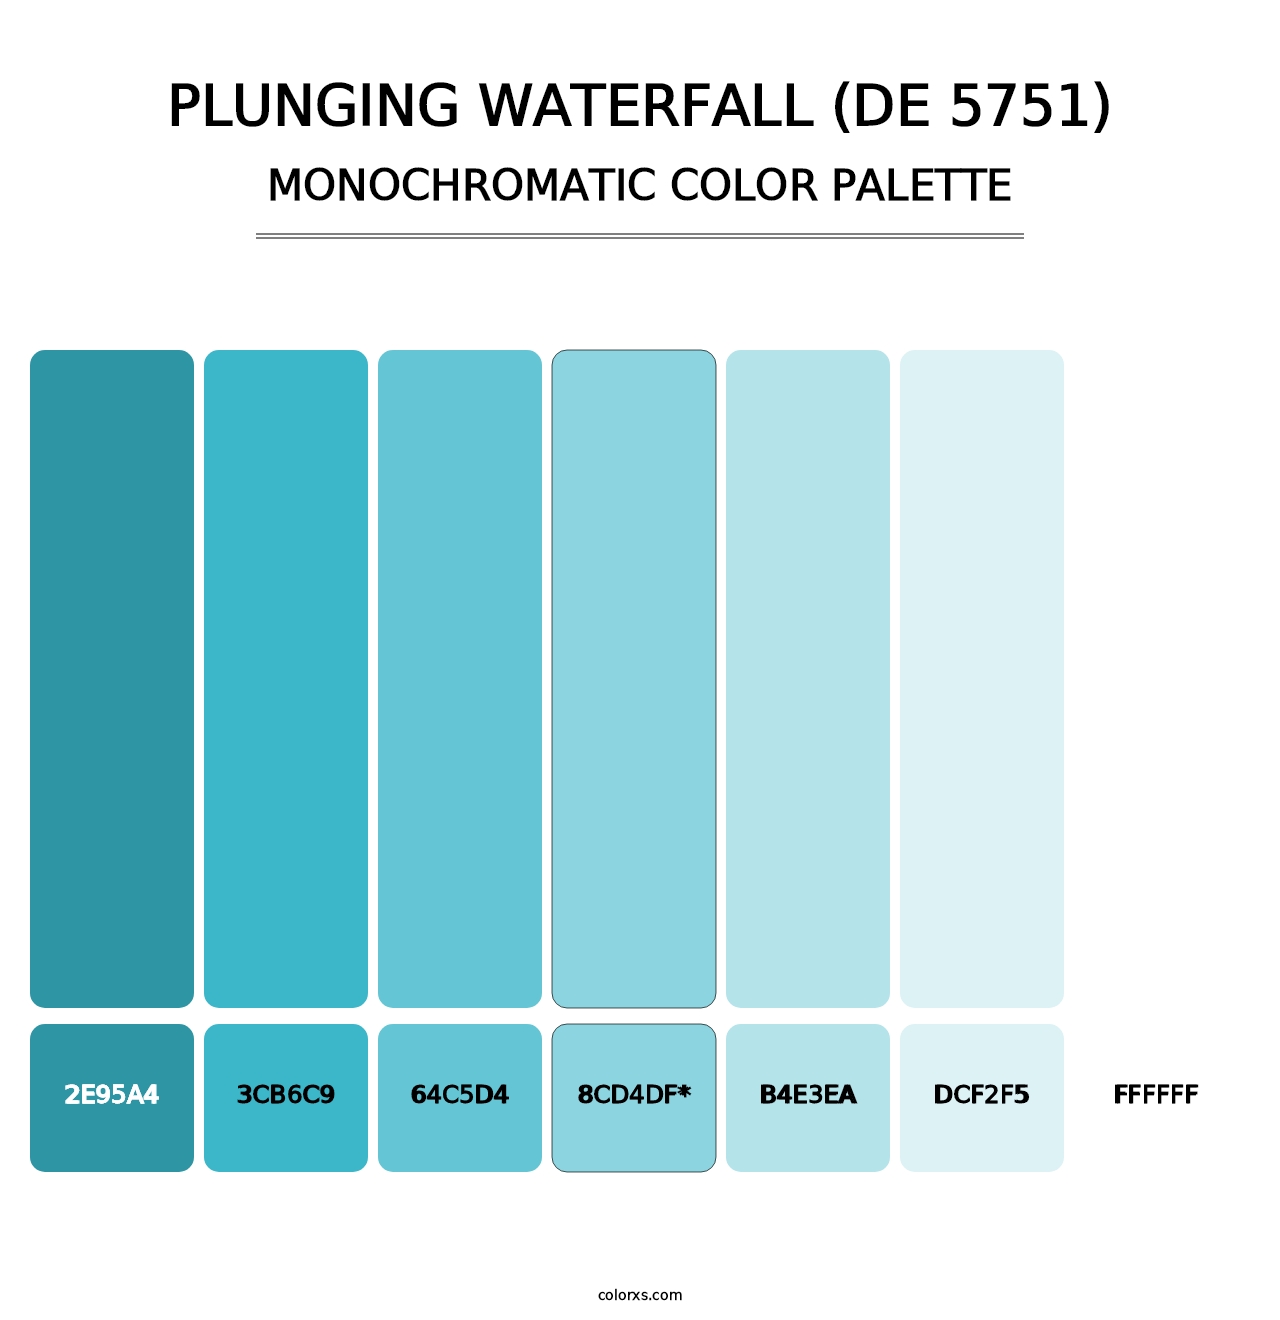 Plunging Waterfall (DE 5751) - Monochromatic Color Palette